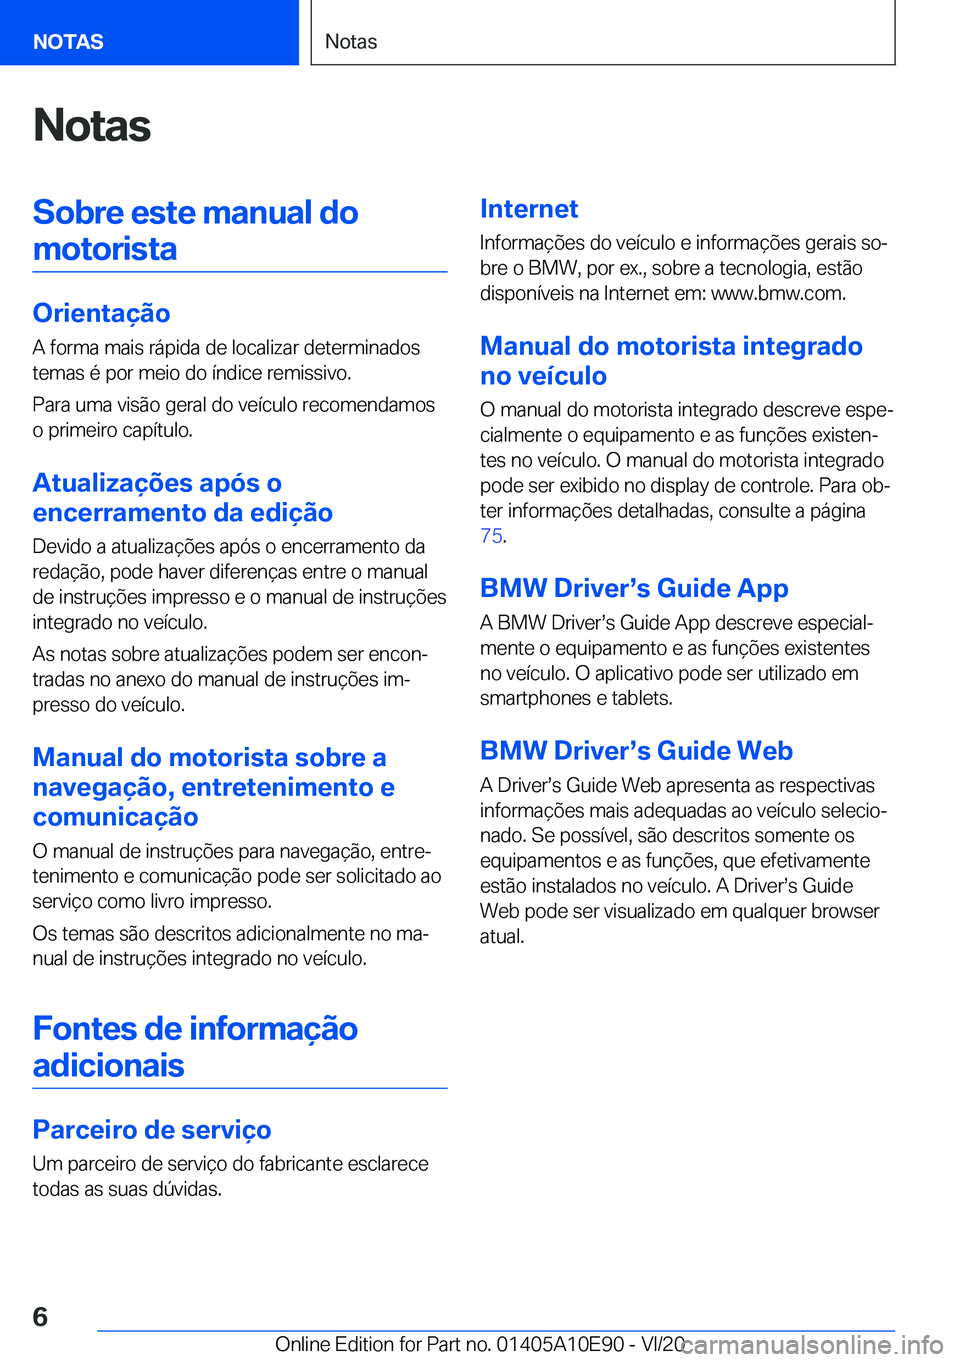 BMW X3 2021  Manual do condutor (in Portuguese) �N�o�t�a�s�S�o�b�r�e��e�s�t�e��m�a�n�u�a�l��d�o�m�o�t�o�r�i�s�t�a
�O�r�i�e�n�t�a�